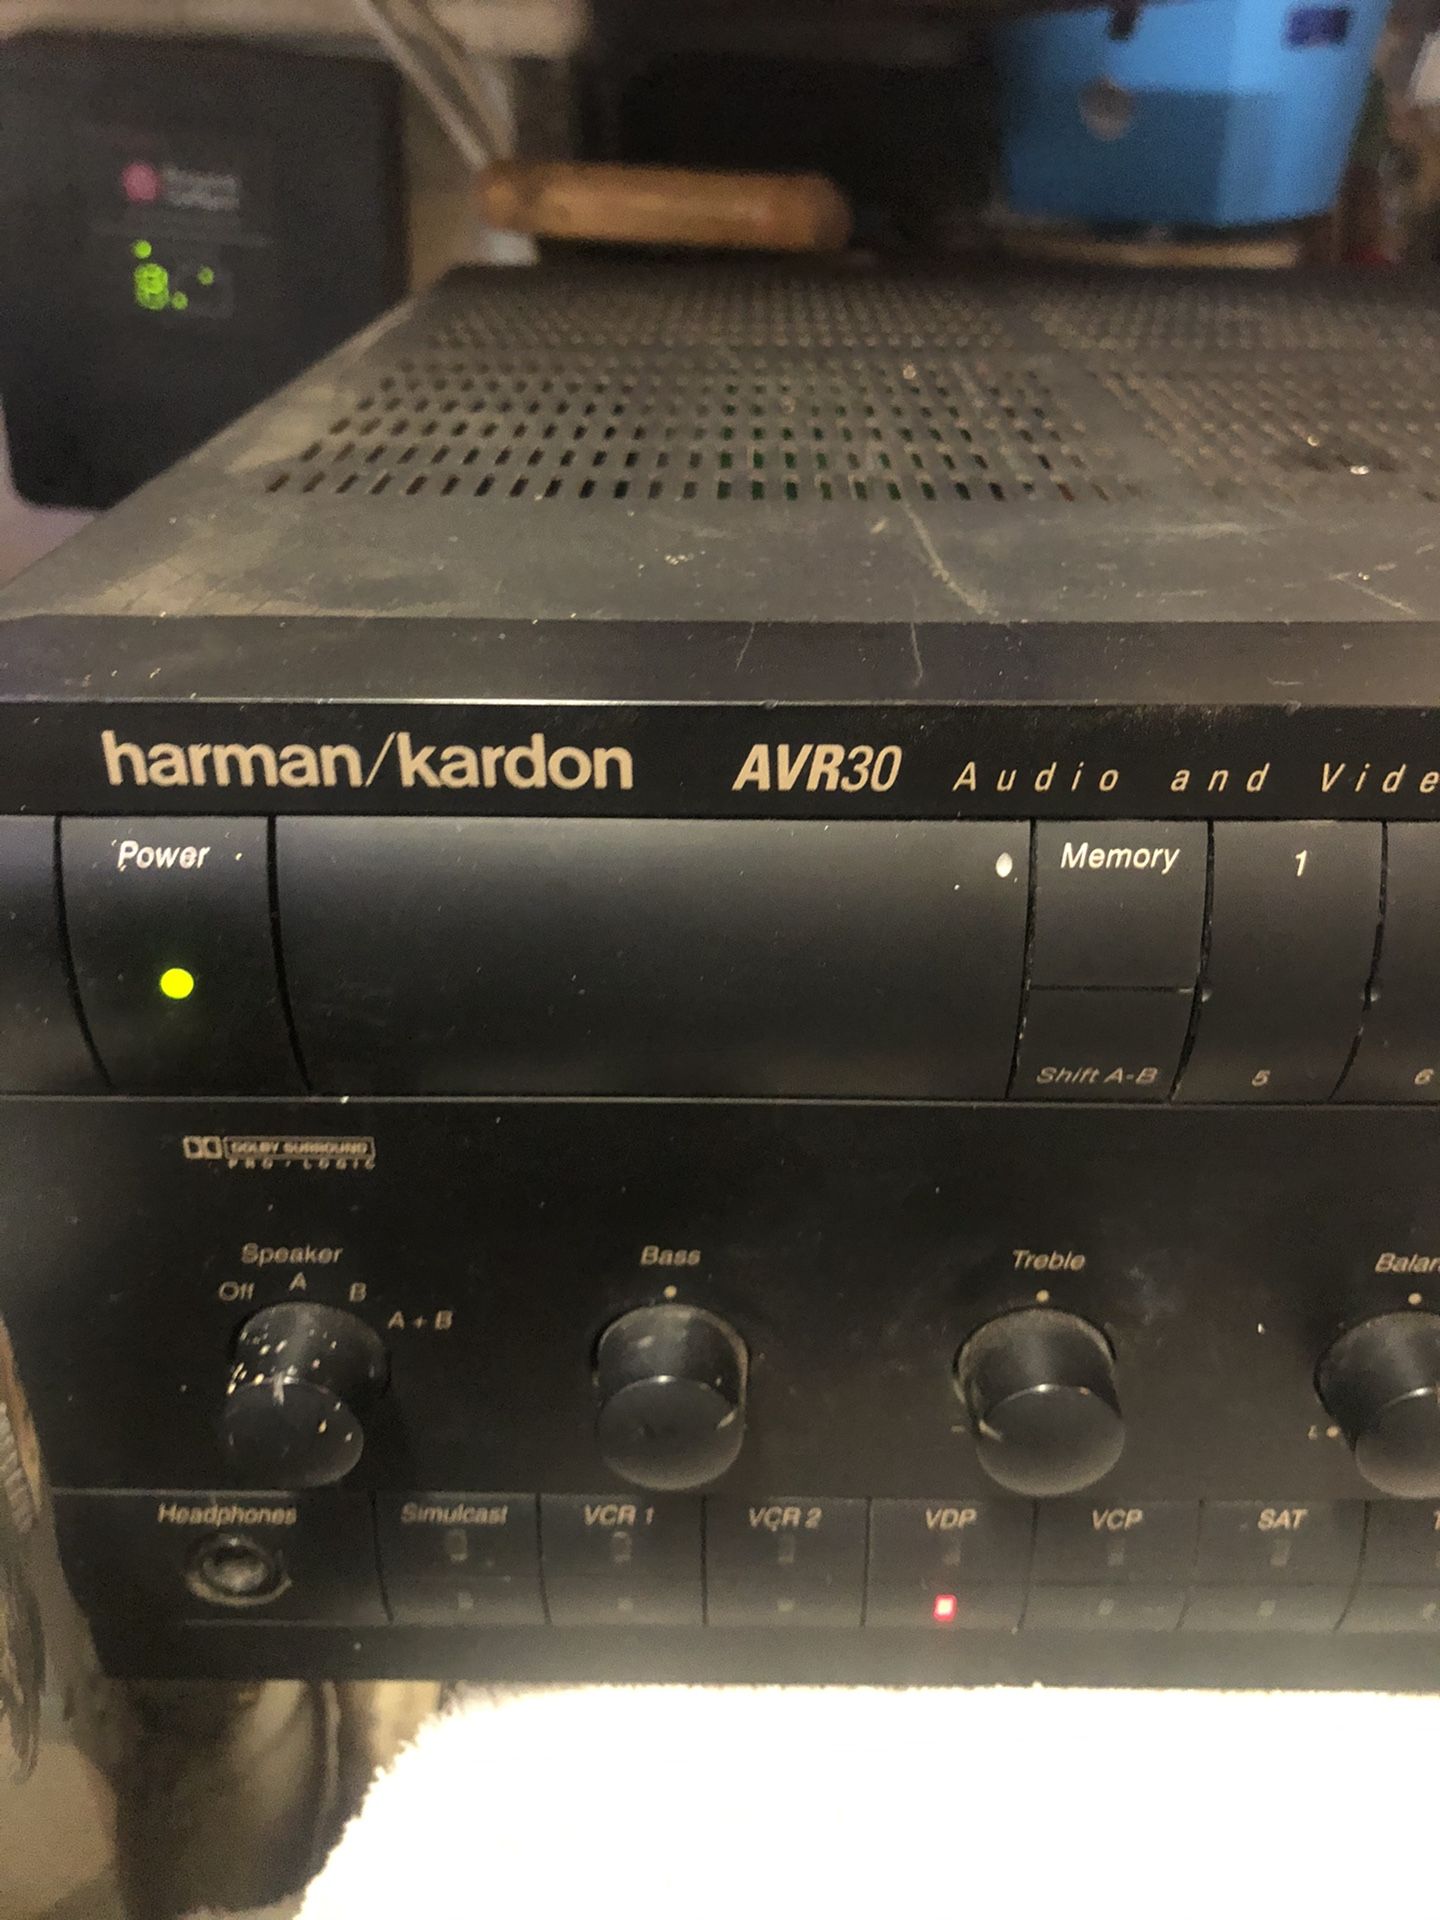 Harmon Cardin audio Video Receiver